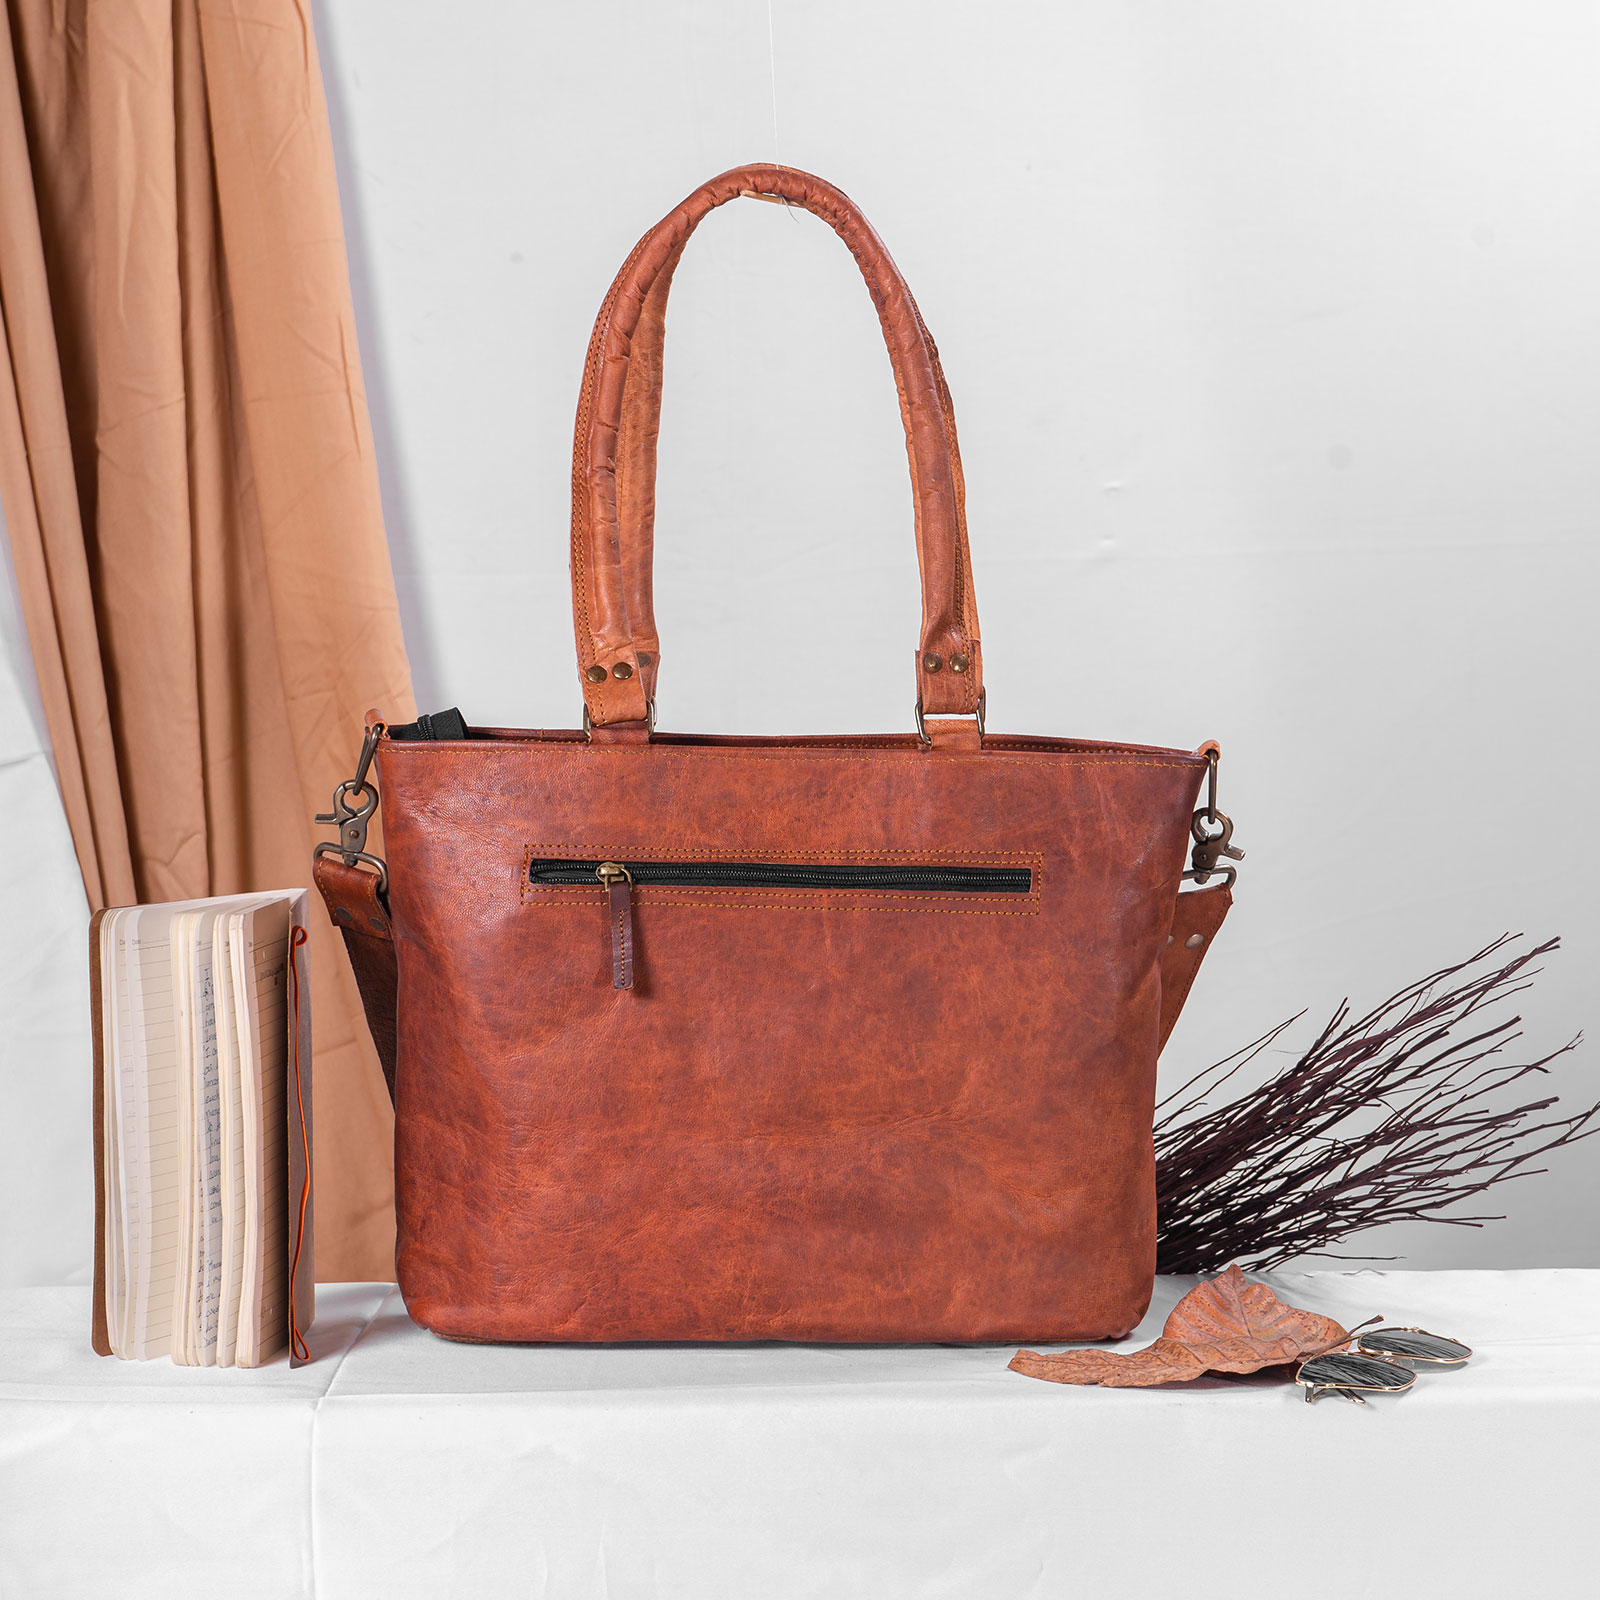 Madosh Womens Tote Handbag Genuine Leather Shoulder Purse Satchel Crossbody Ladies Brown Bag - image 2 of 6